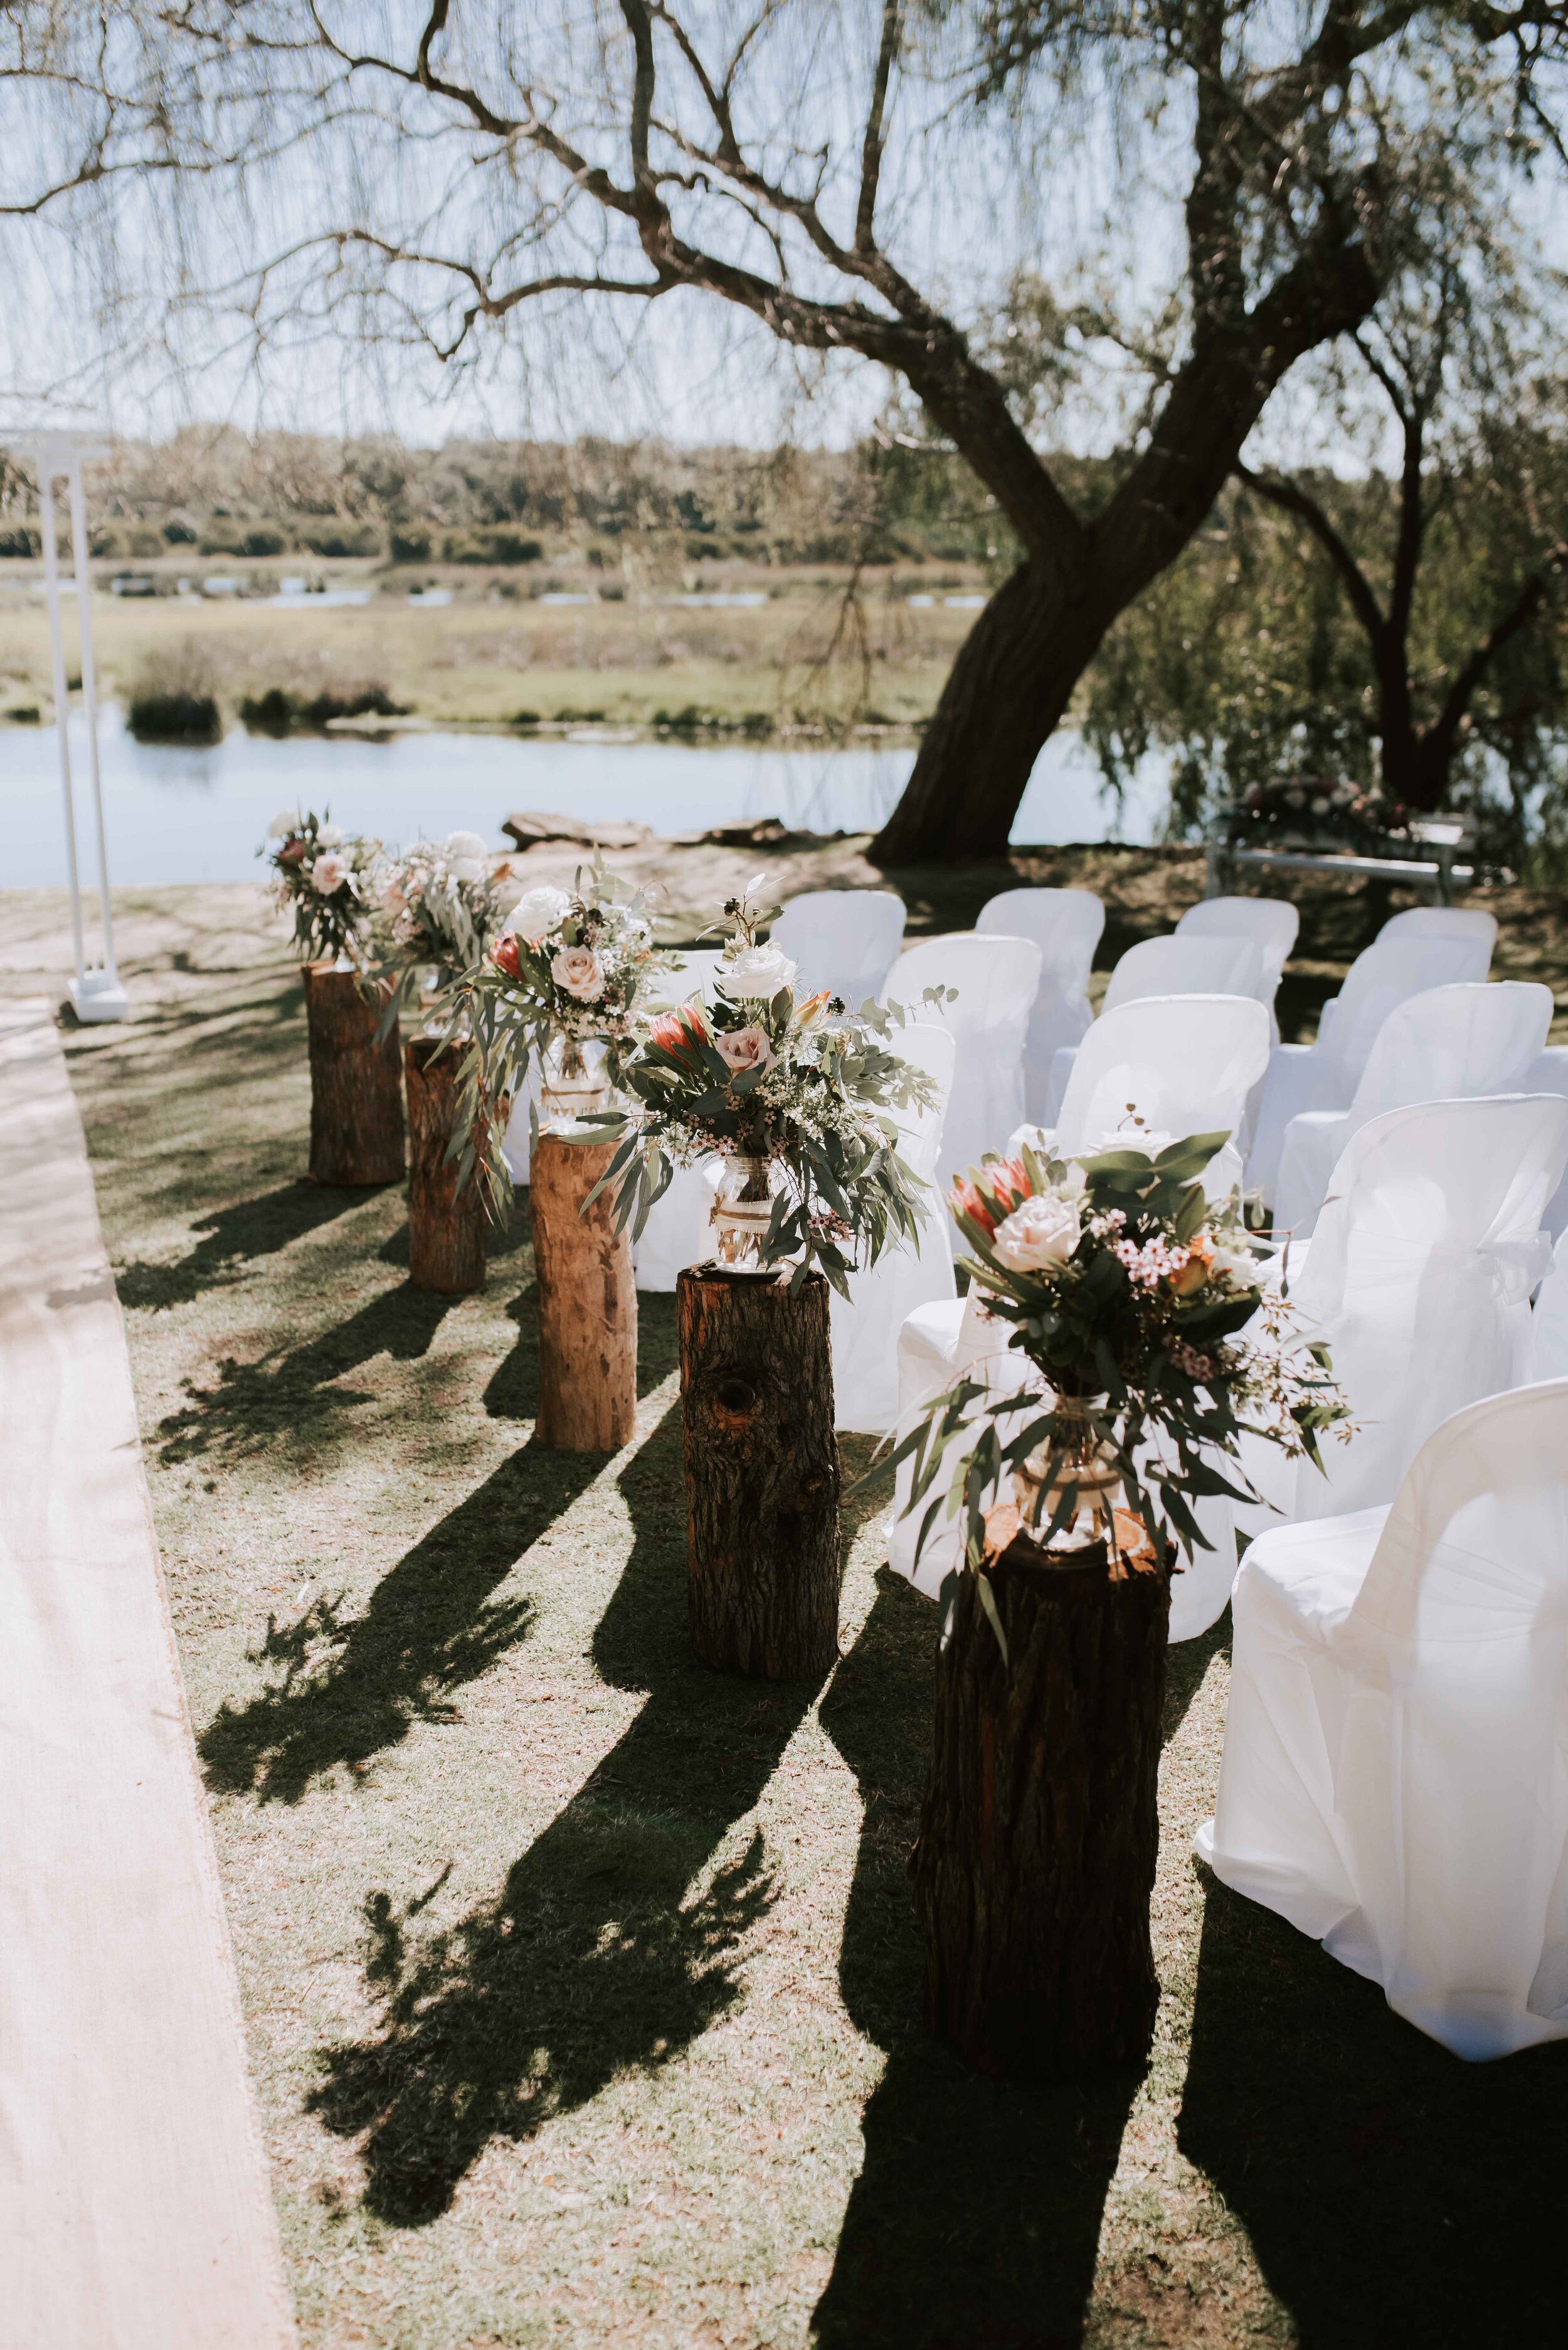 Yanchep park beautiful spring wedding | Perth wedding photographer Amy Skinner-249.jpg